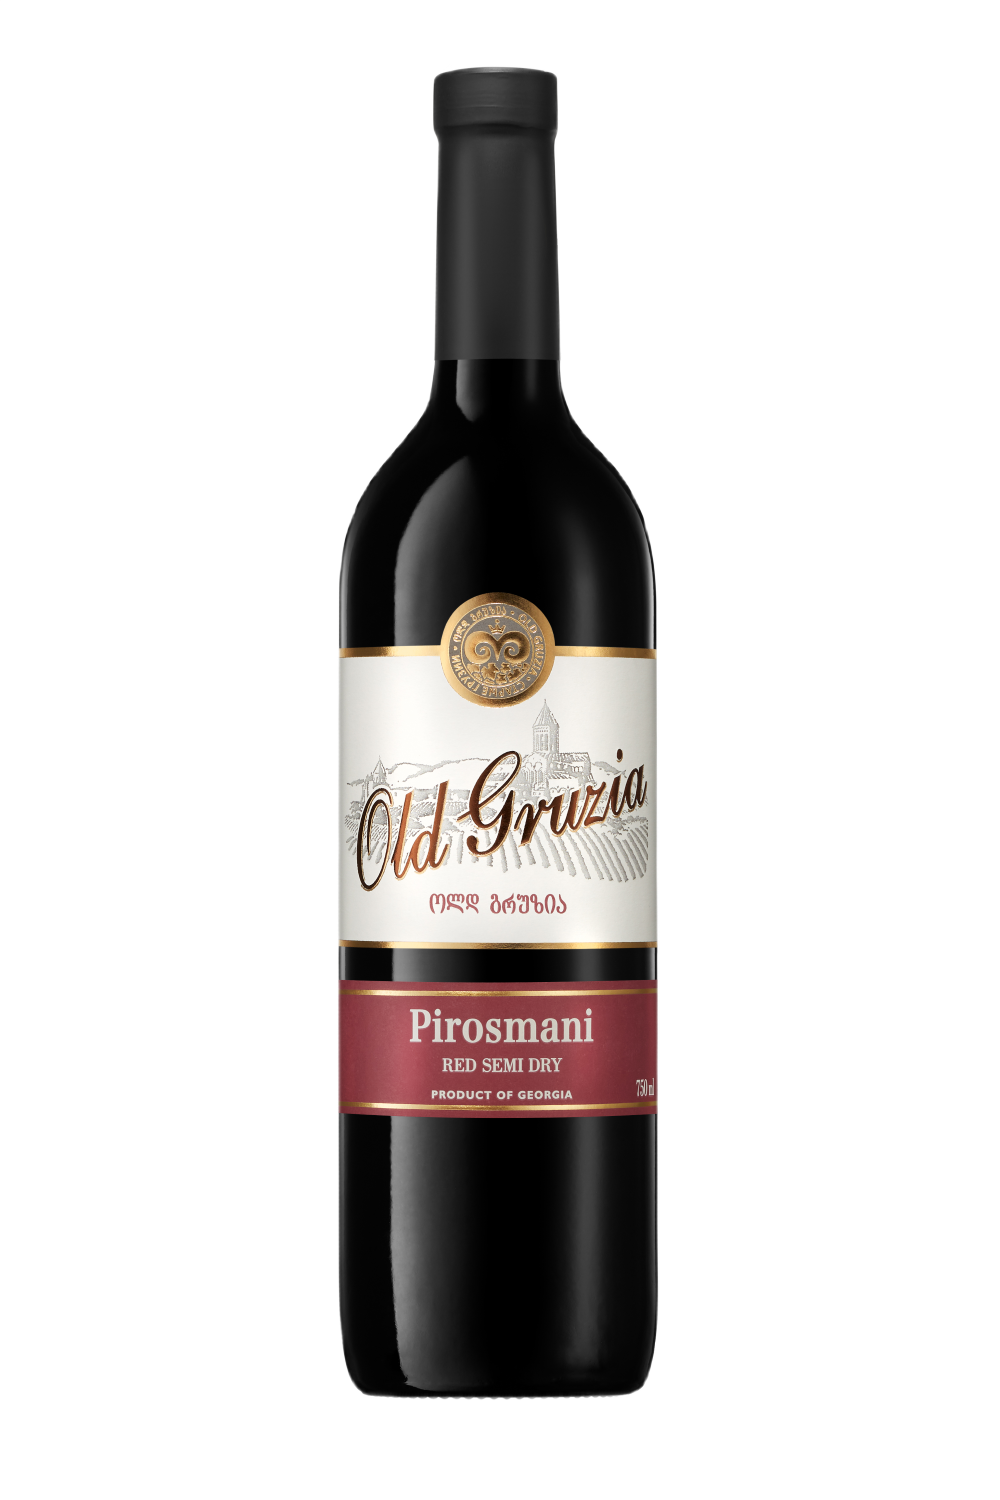 Georgian wines - (Polski) Pirosmani red